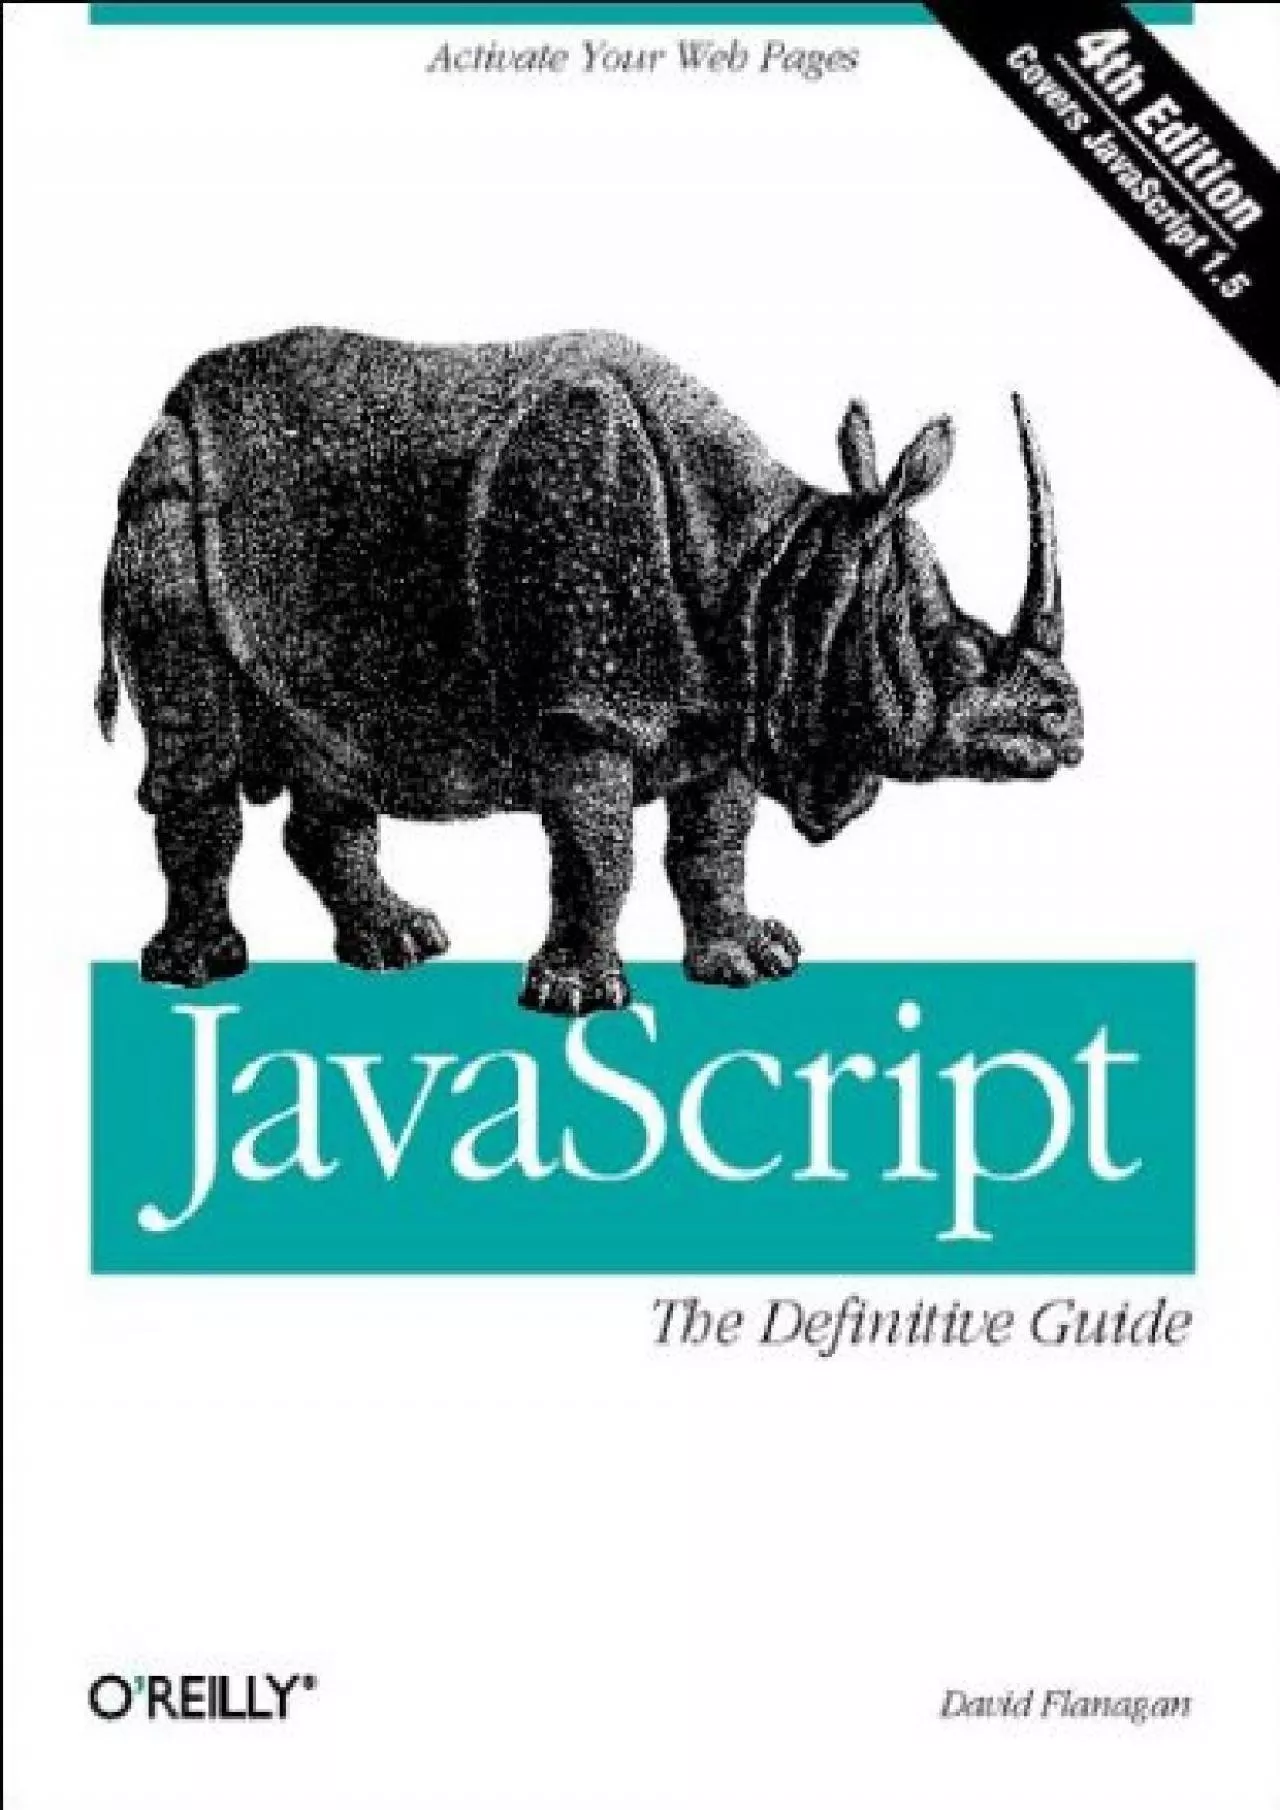 [PDF]-JavaScript: The Definitive Guide